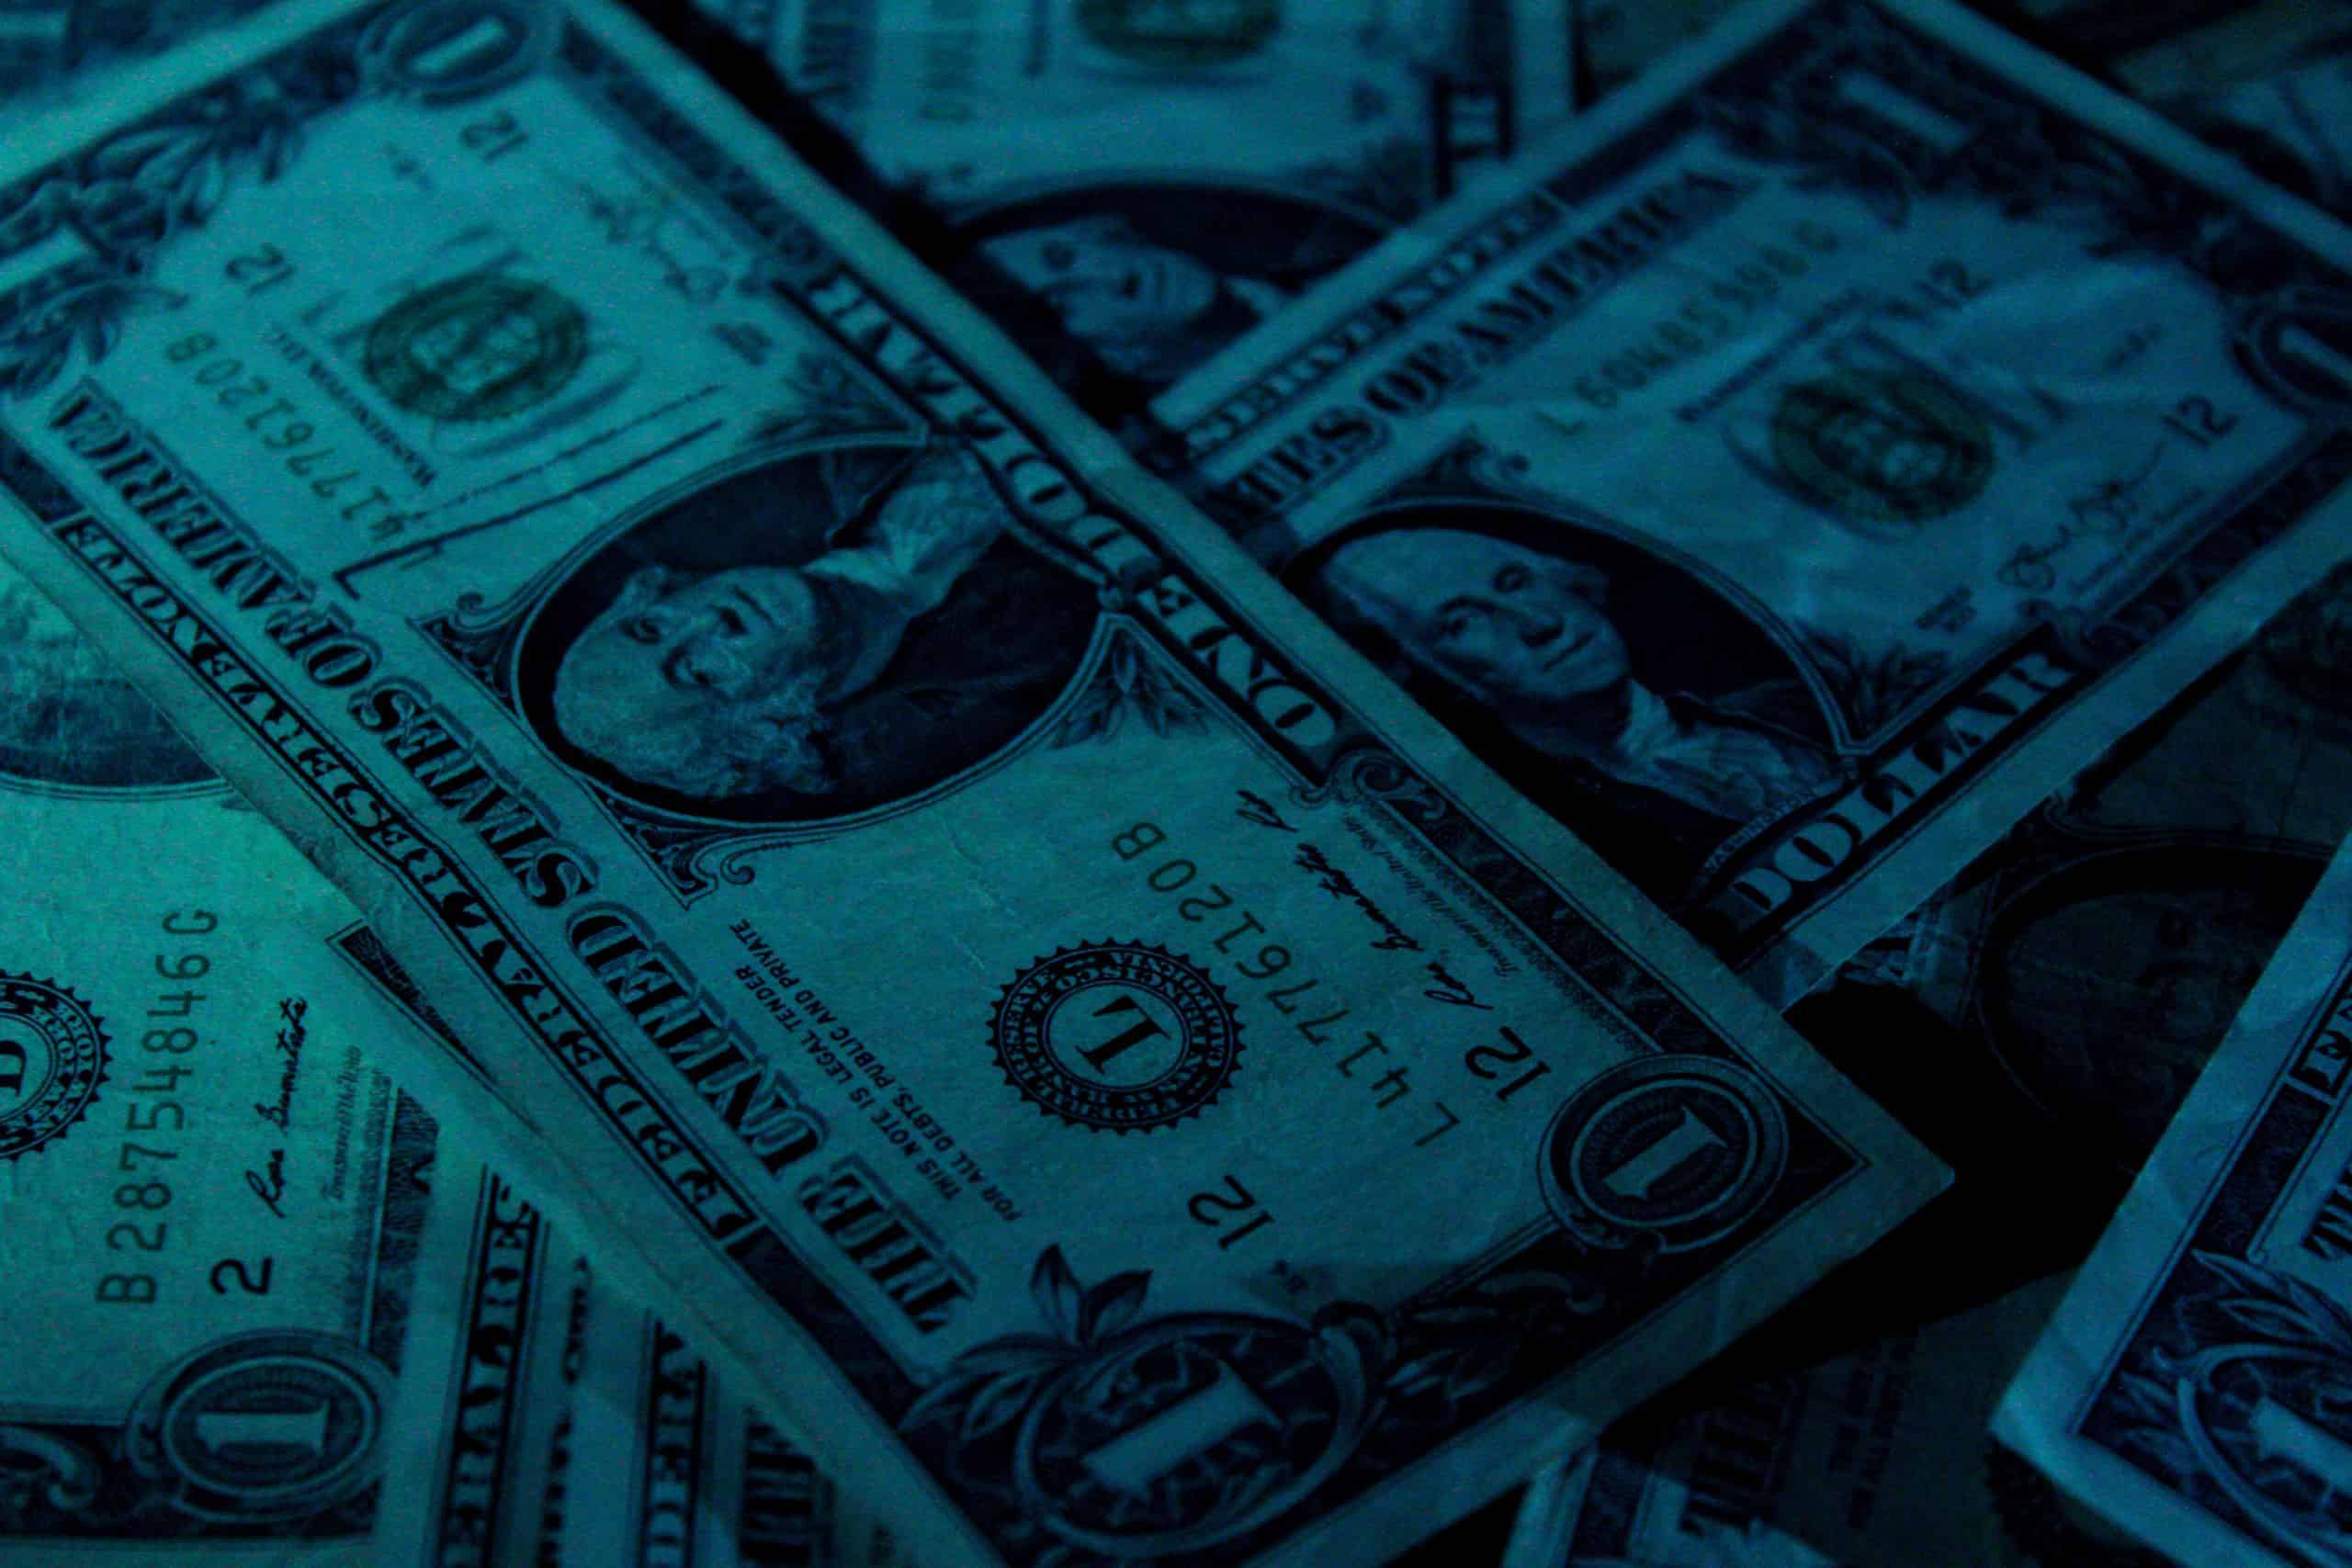 a pile of one dollar bills in dim lighting